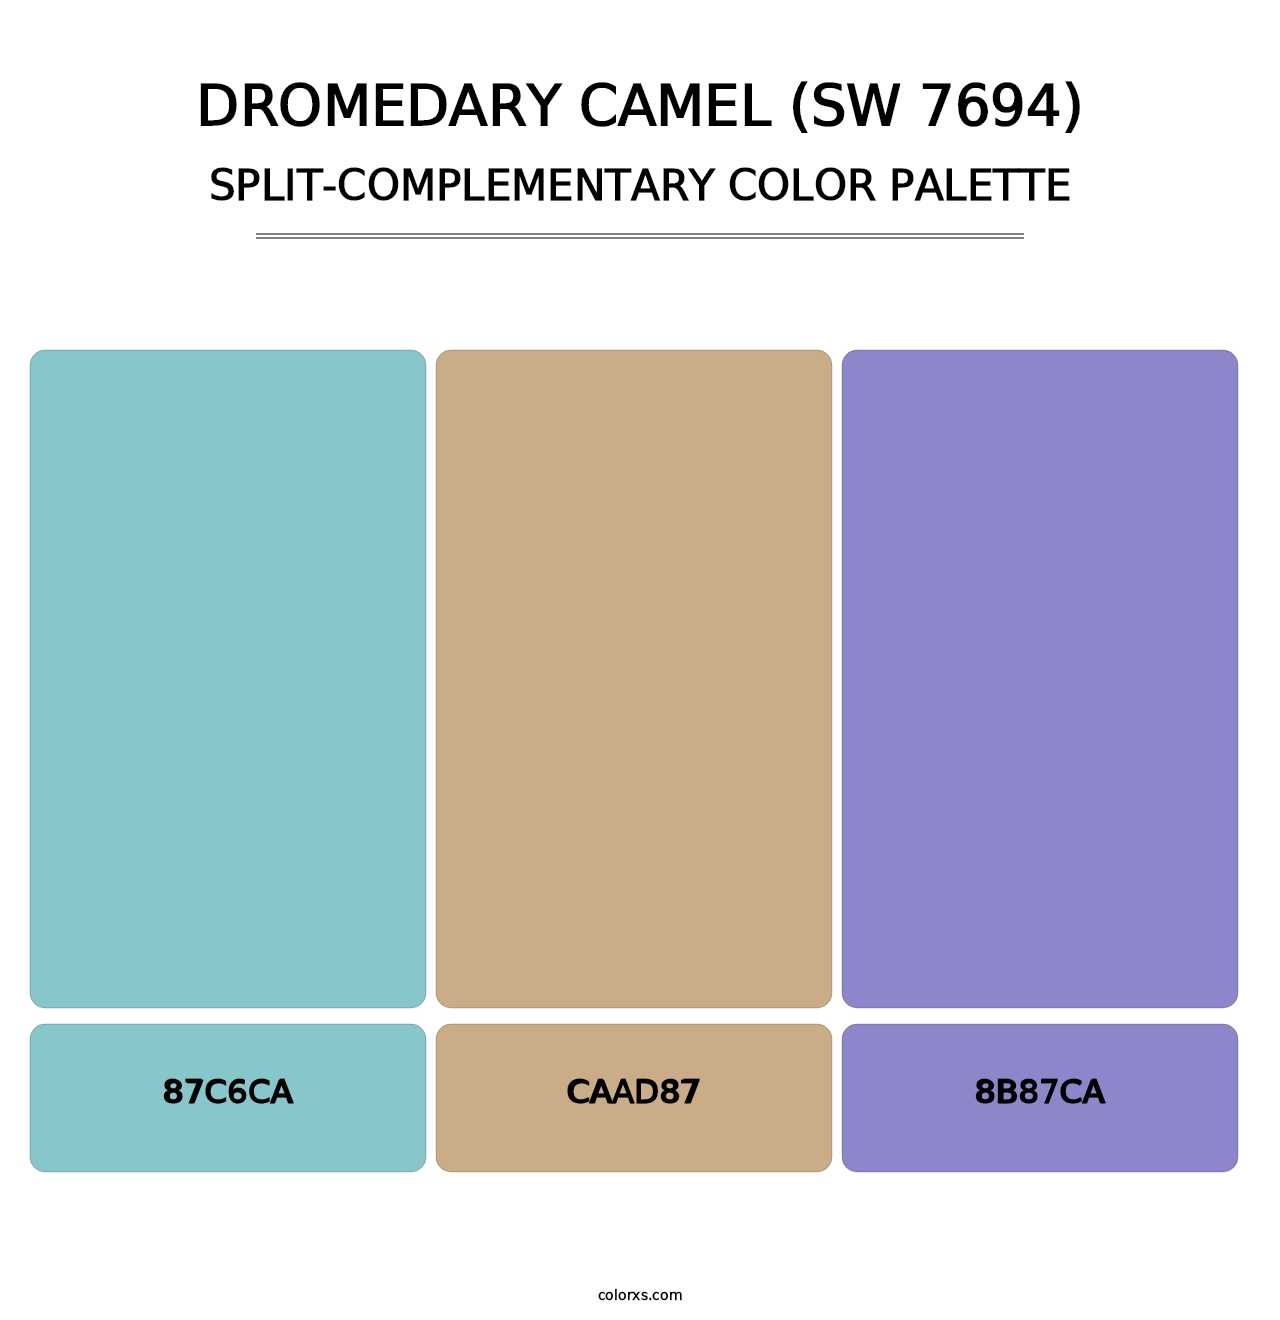 Dromedary Camel (SW 7694) - Split-Complementary Color Palette